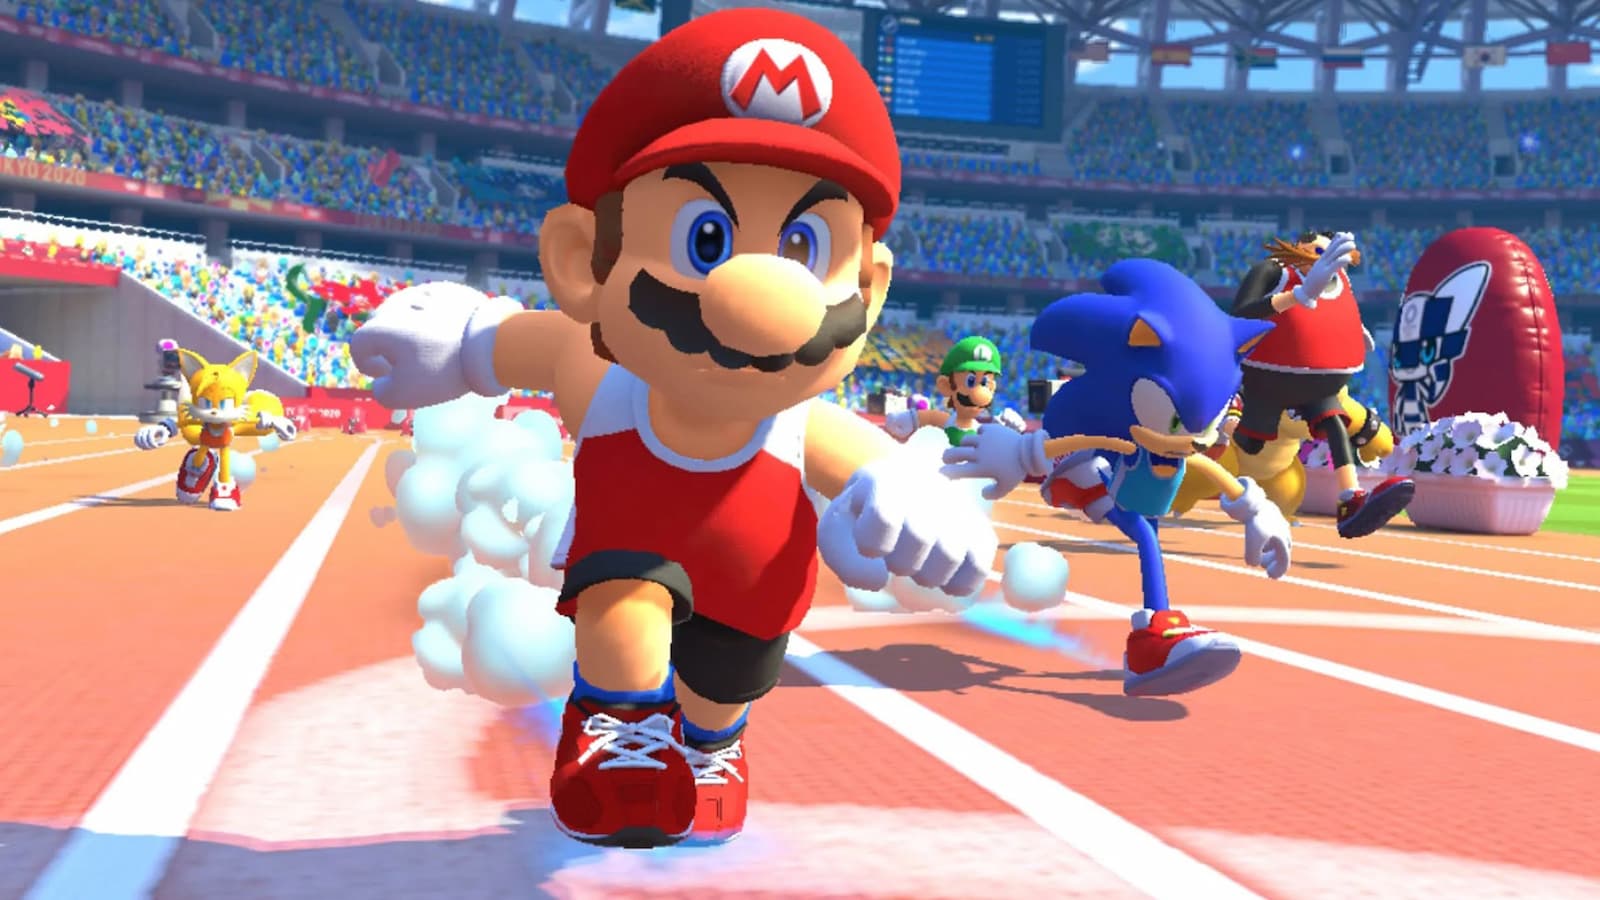 adamant still that Sega Sonic Dexerto “surpass” - Mario can